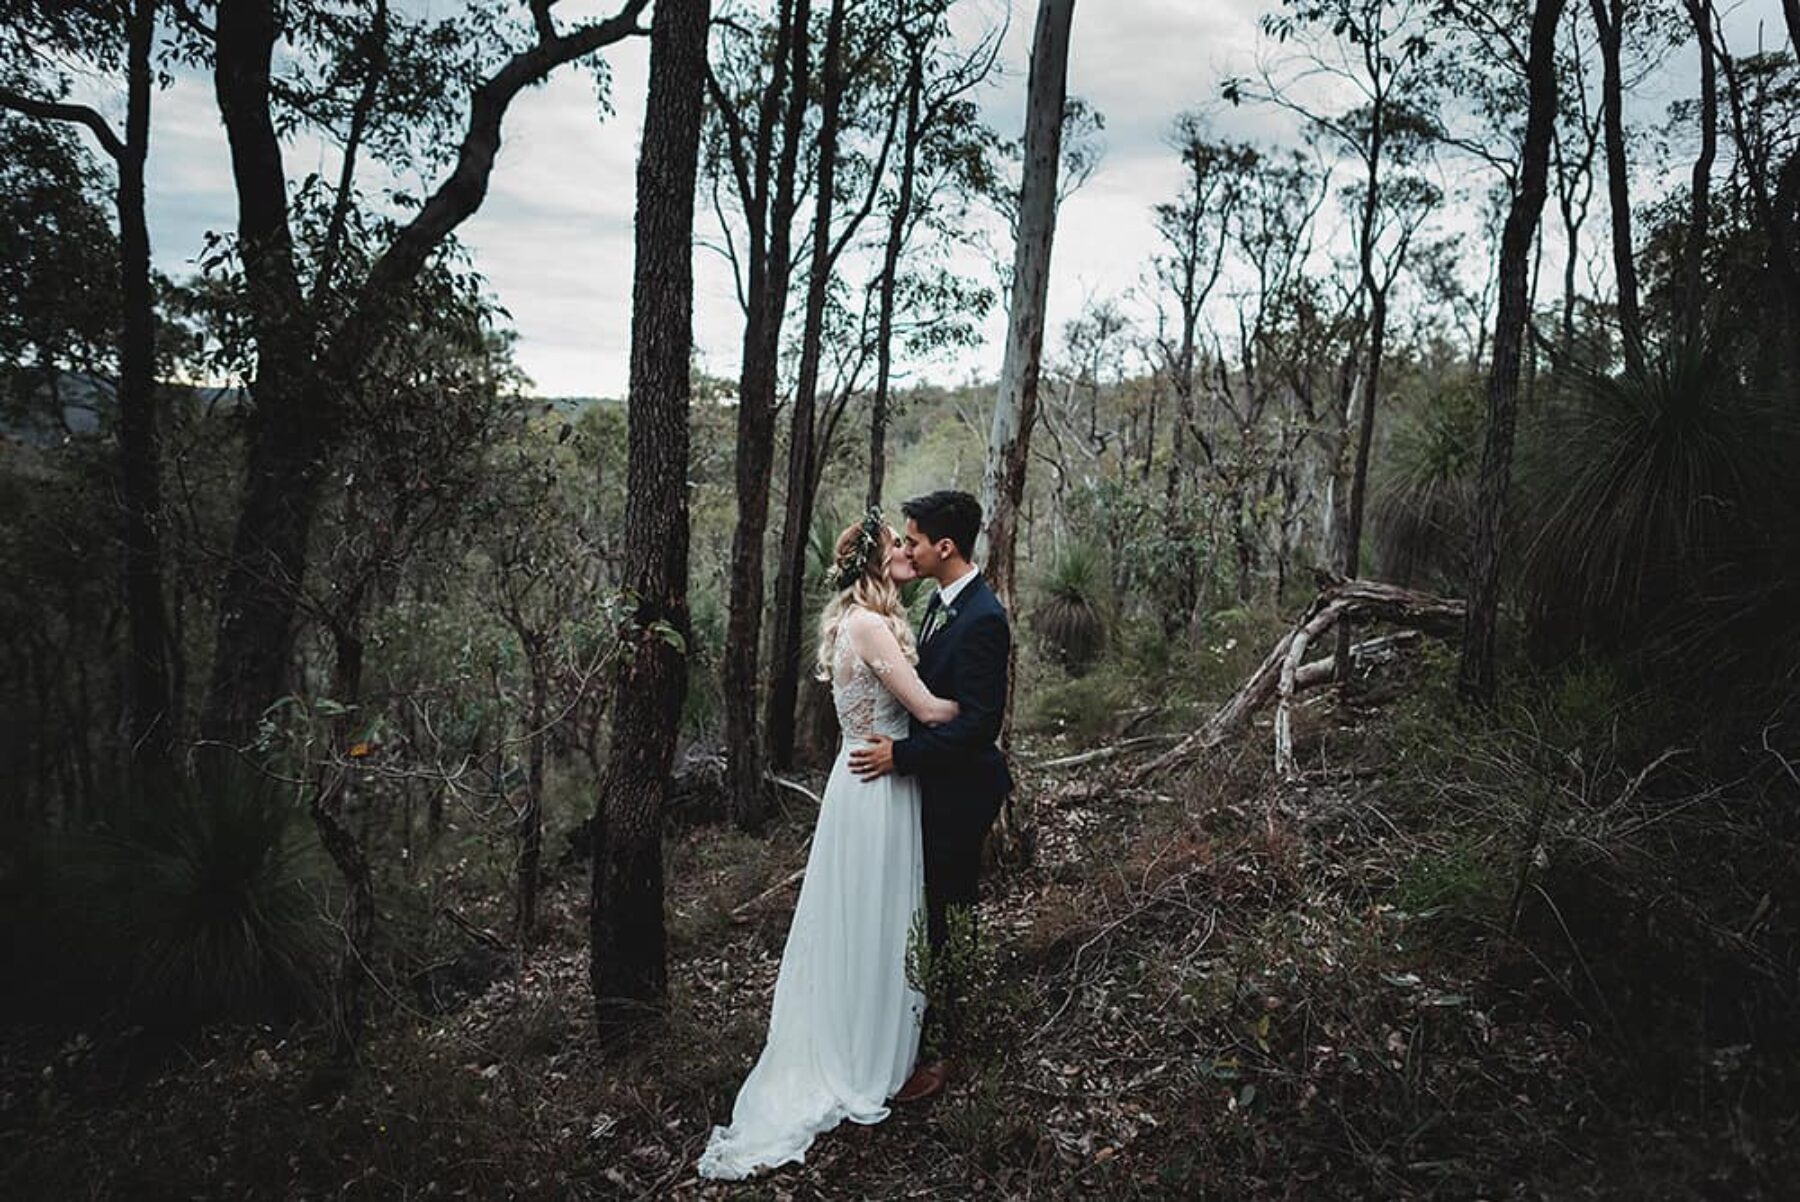 Darlington Estate wedding - Perth photographer CJ WIliams